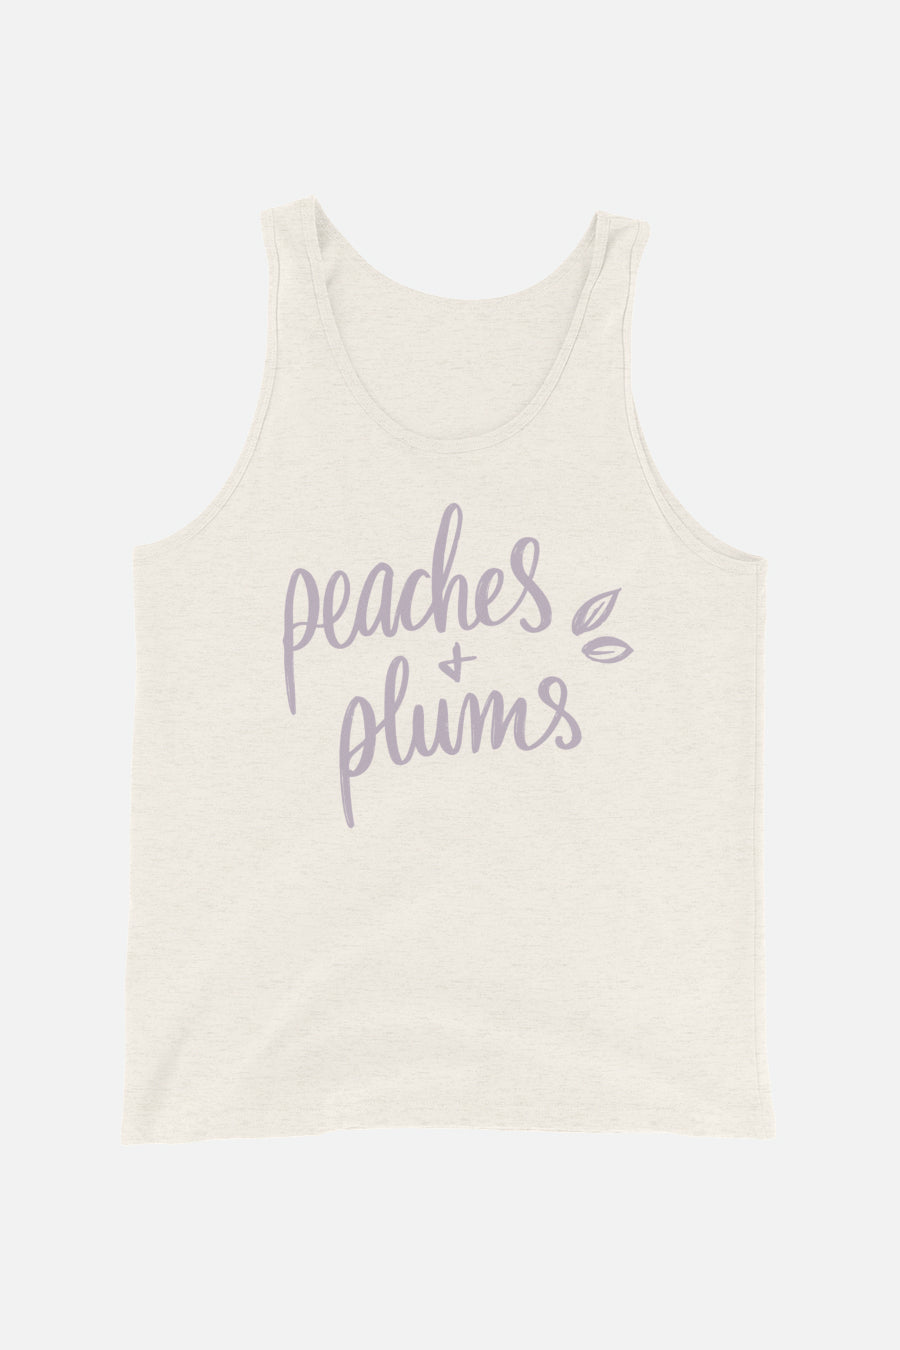 Peaches + Plums Unisex Tank Top